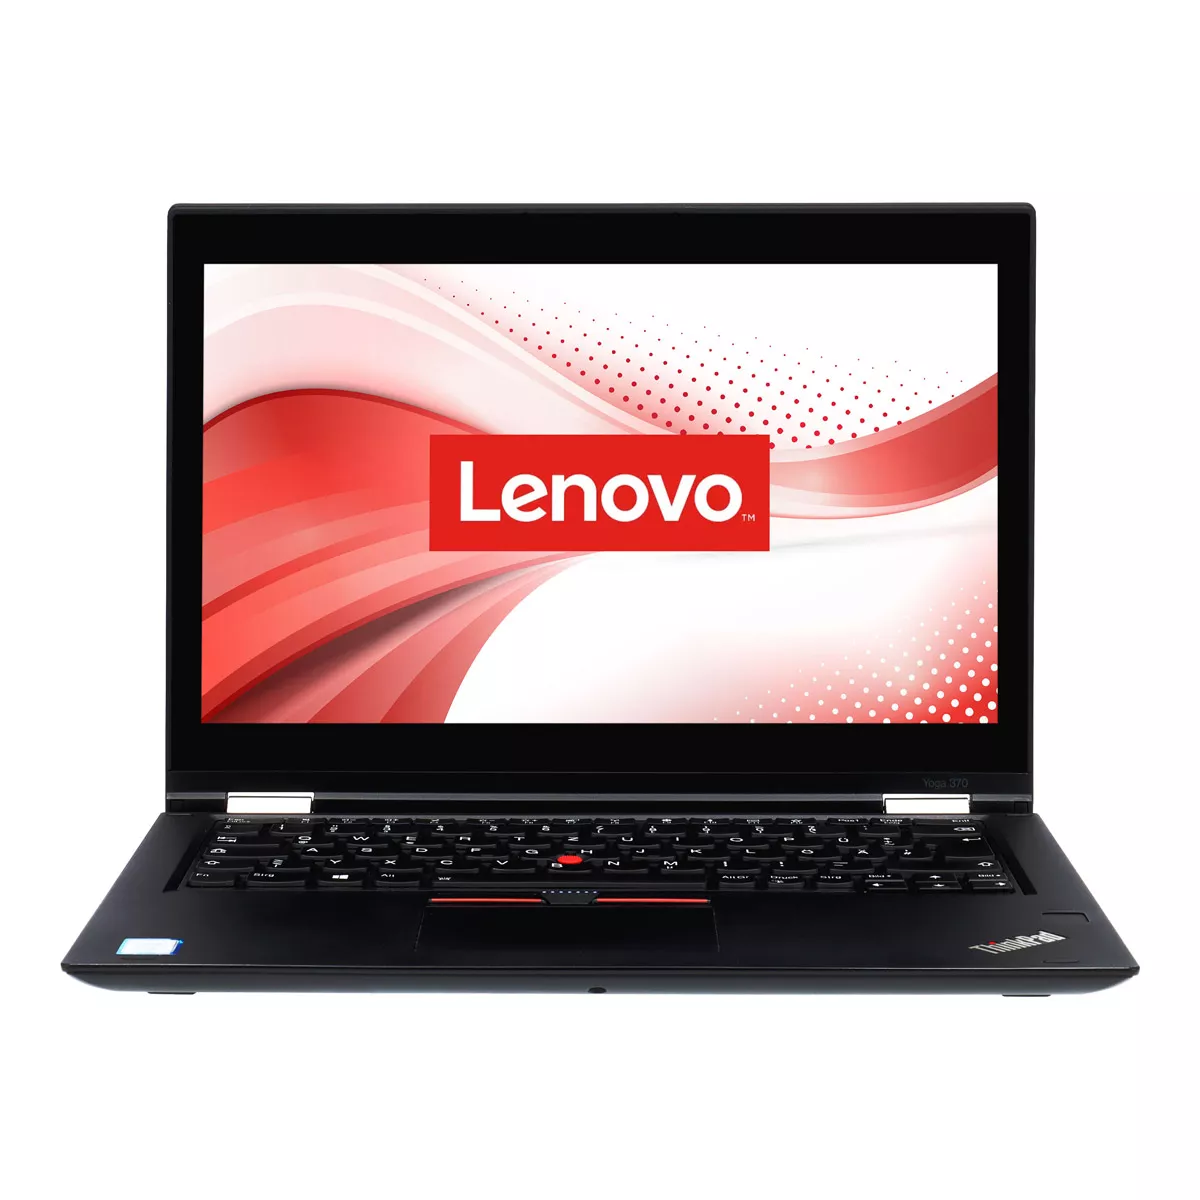 Lenovo ThinkPad Yoga 370 Core i5 7300U Full-HD Touch 8 GB 240 GB M.2 SSD Webcam B